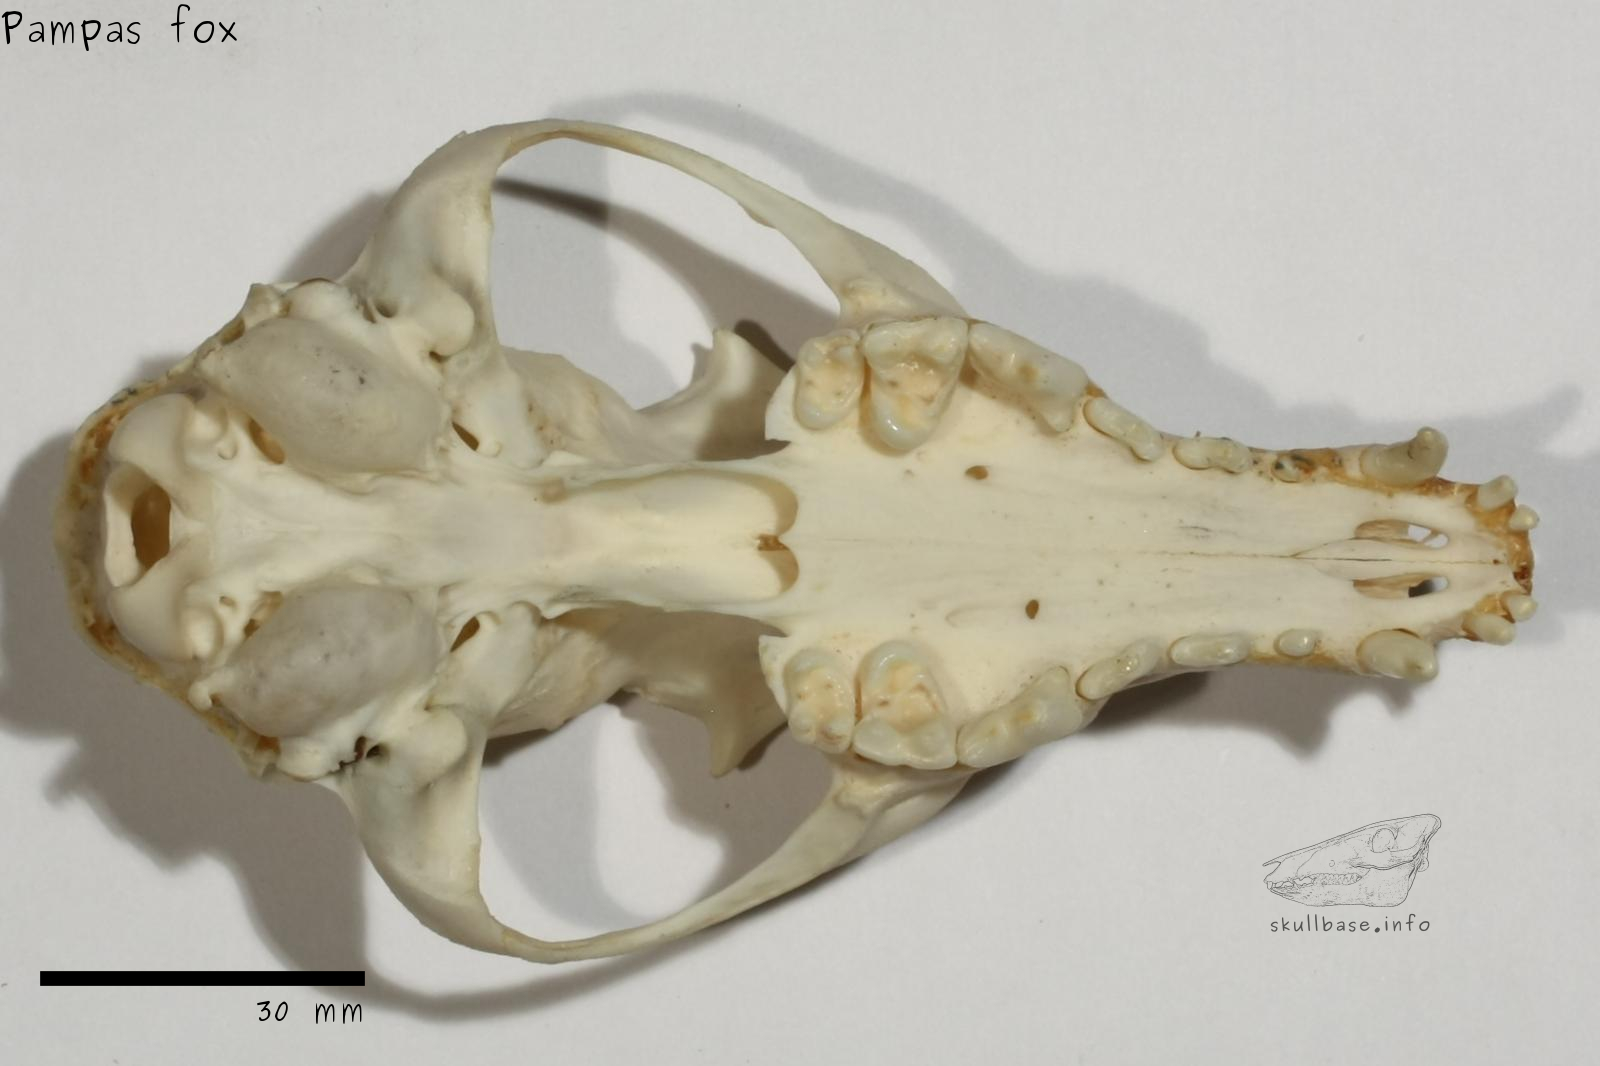 Pampas fox (Lycalopex gymnocercus) skull ventral view